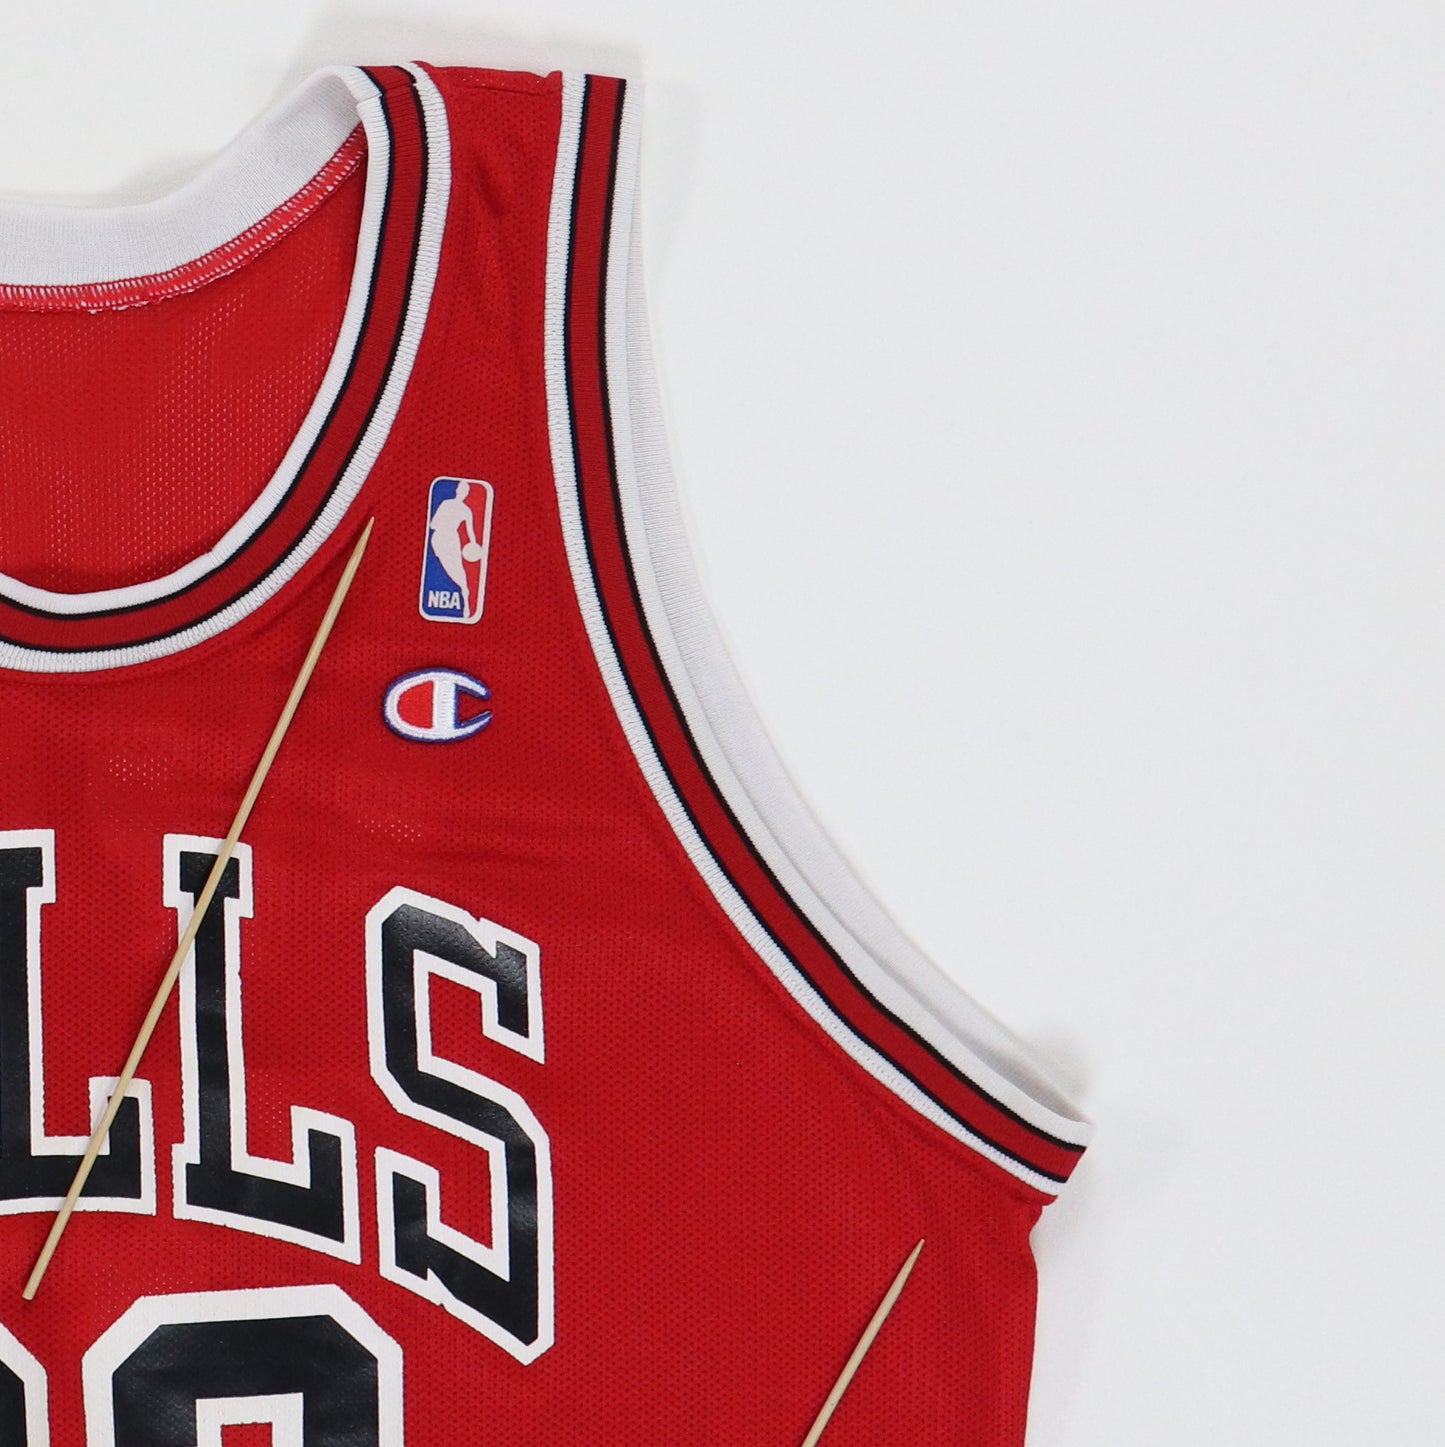 Scottie Pippen Chicago Bulls White Throwback Basketball Jersey.